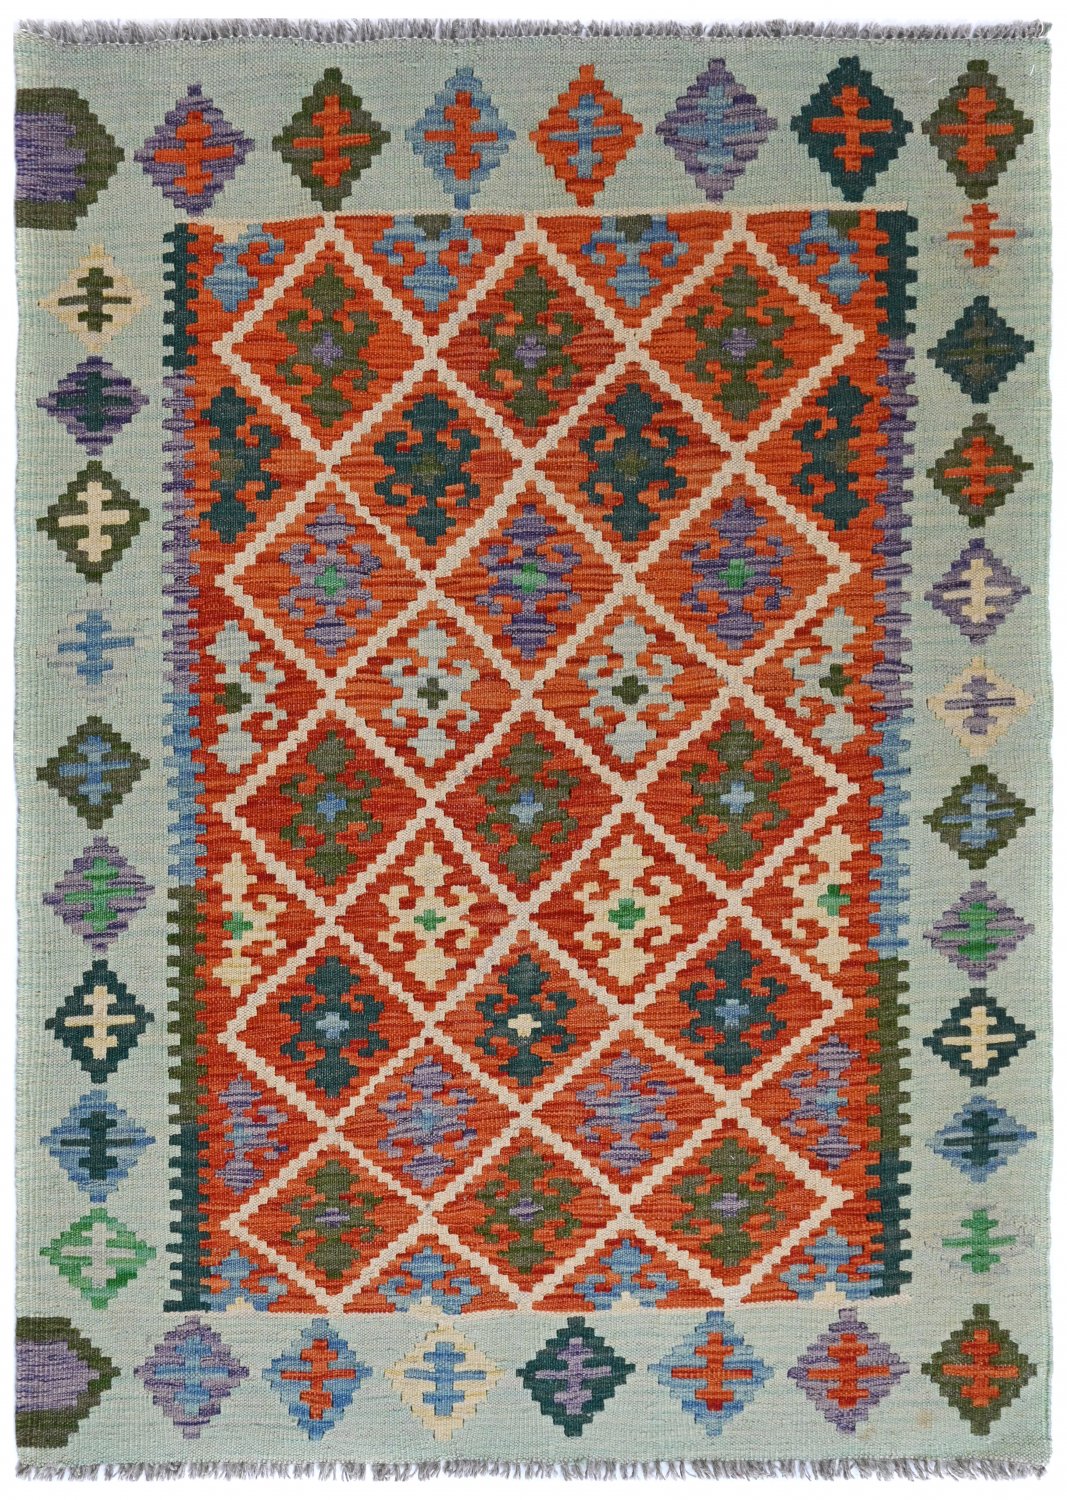 Kilim rug Afghan 144 x 99 cm